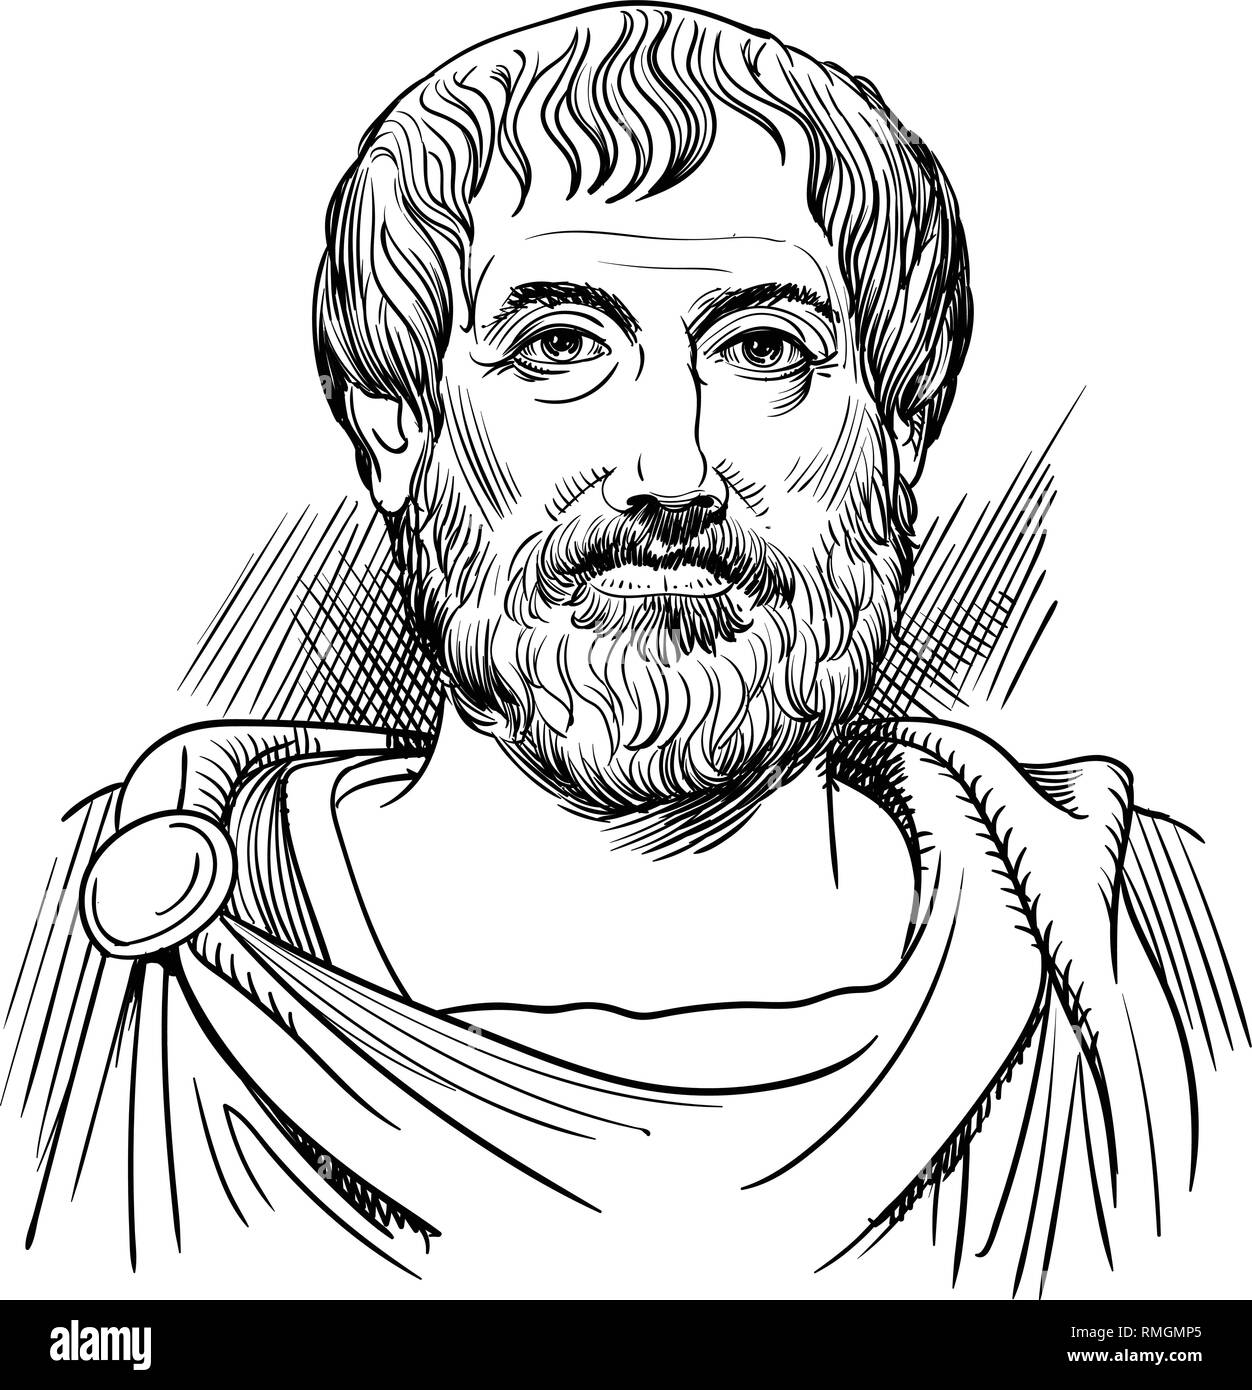 Aristotle portrait in line art illustration. He was ancient Greek philosopher, scientist, author of philosophical system on Christian scholasticism. Stock Vector